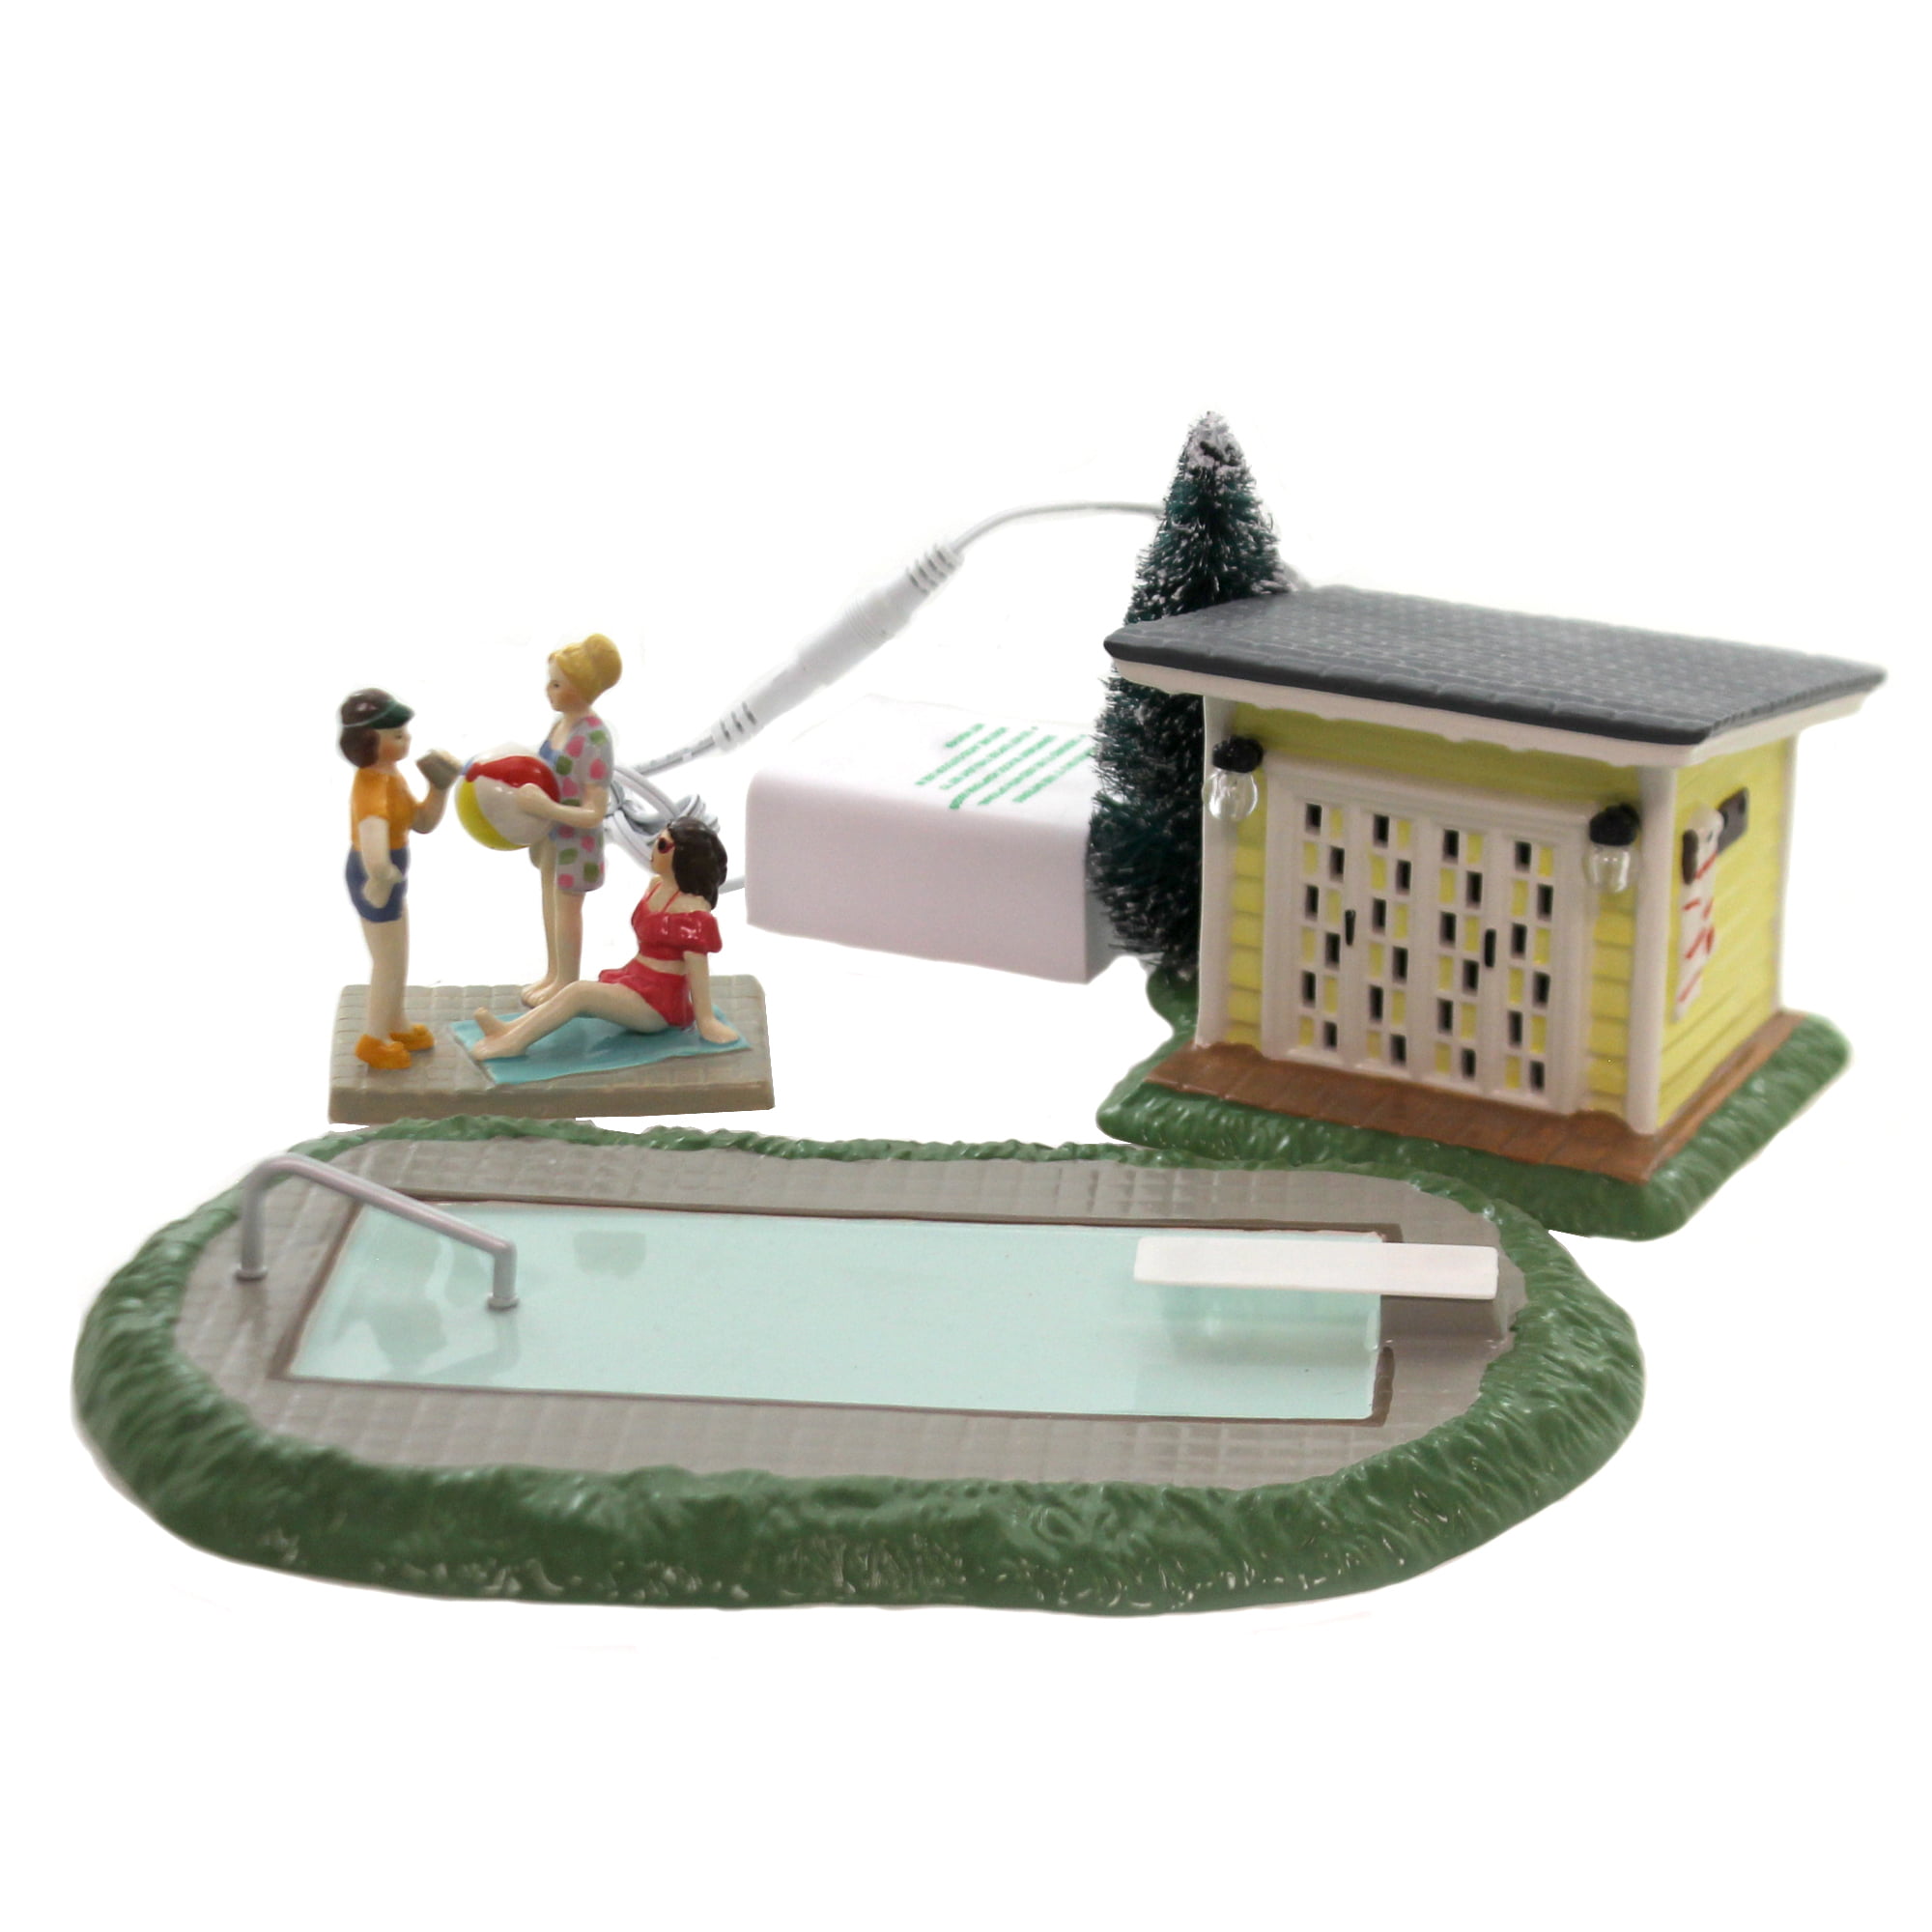 Department 56 Christmas Vacation Pool Fantasy Lit Building Figurine Set 6005457 